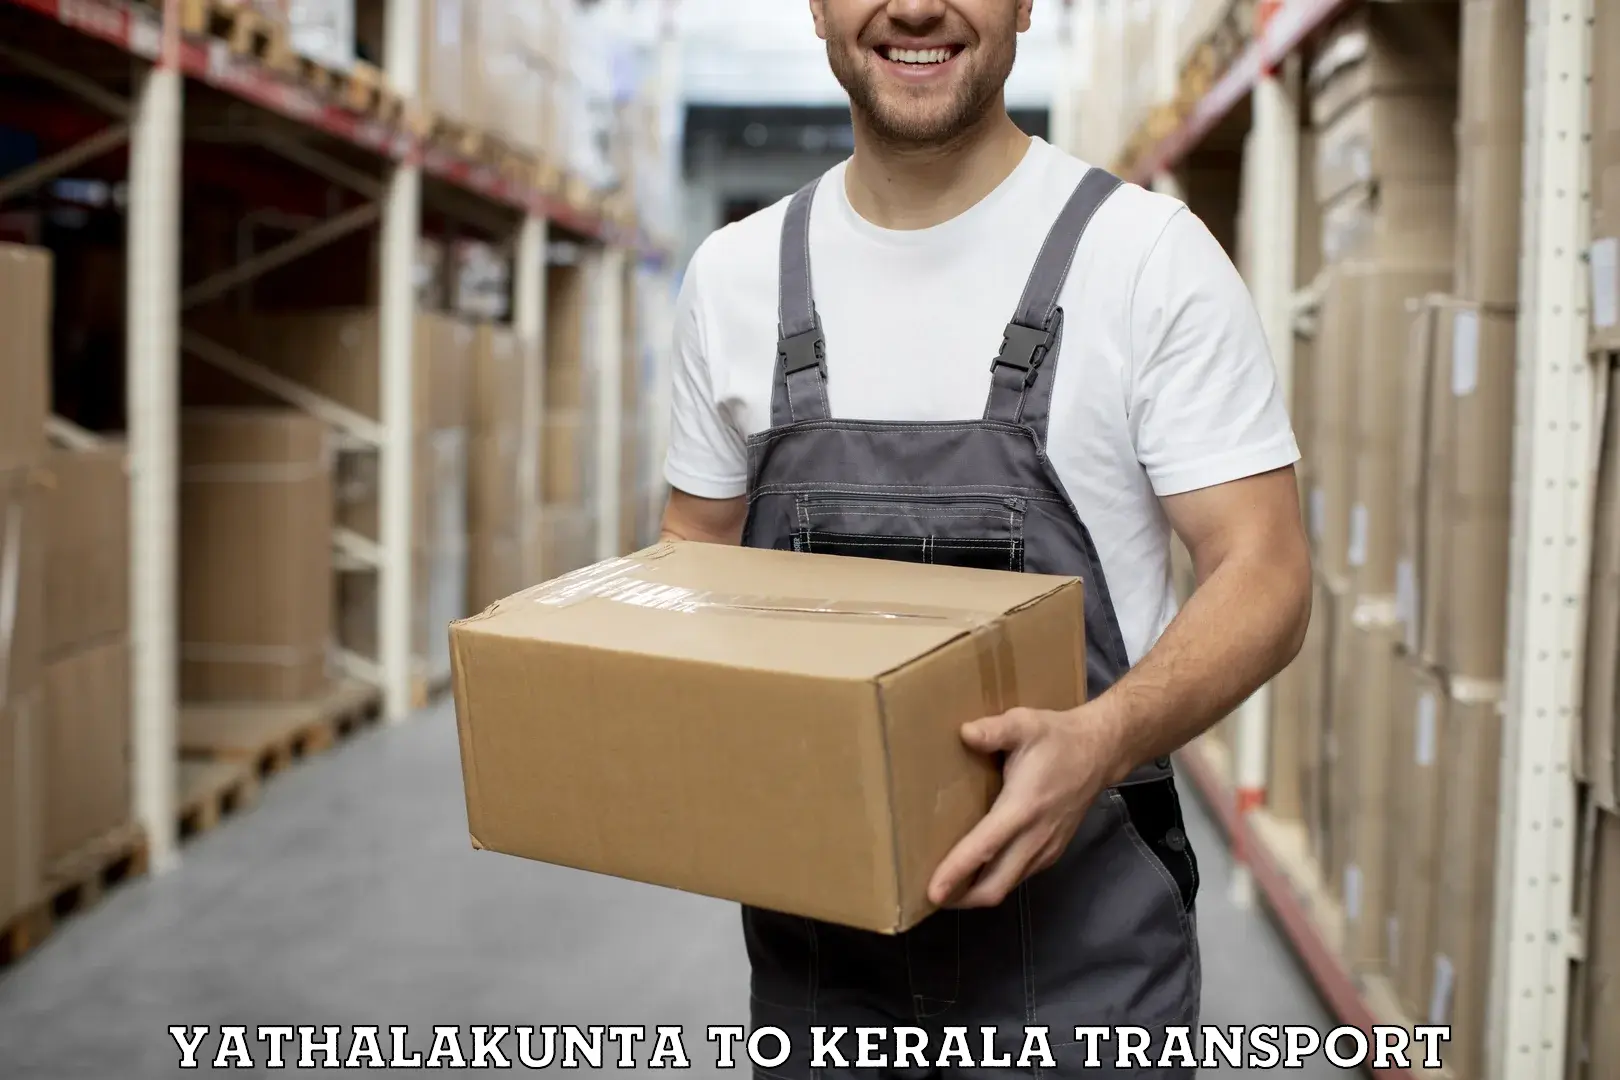 Delivery service Yathalakunta to Kerala